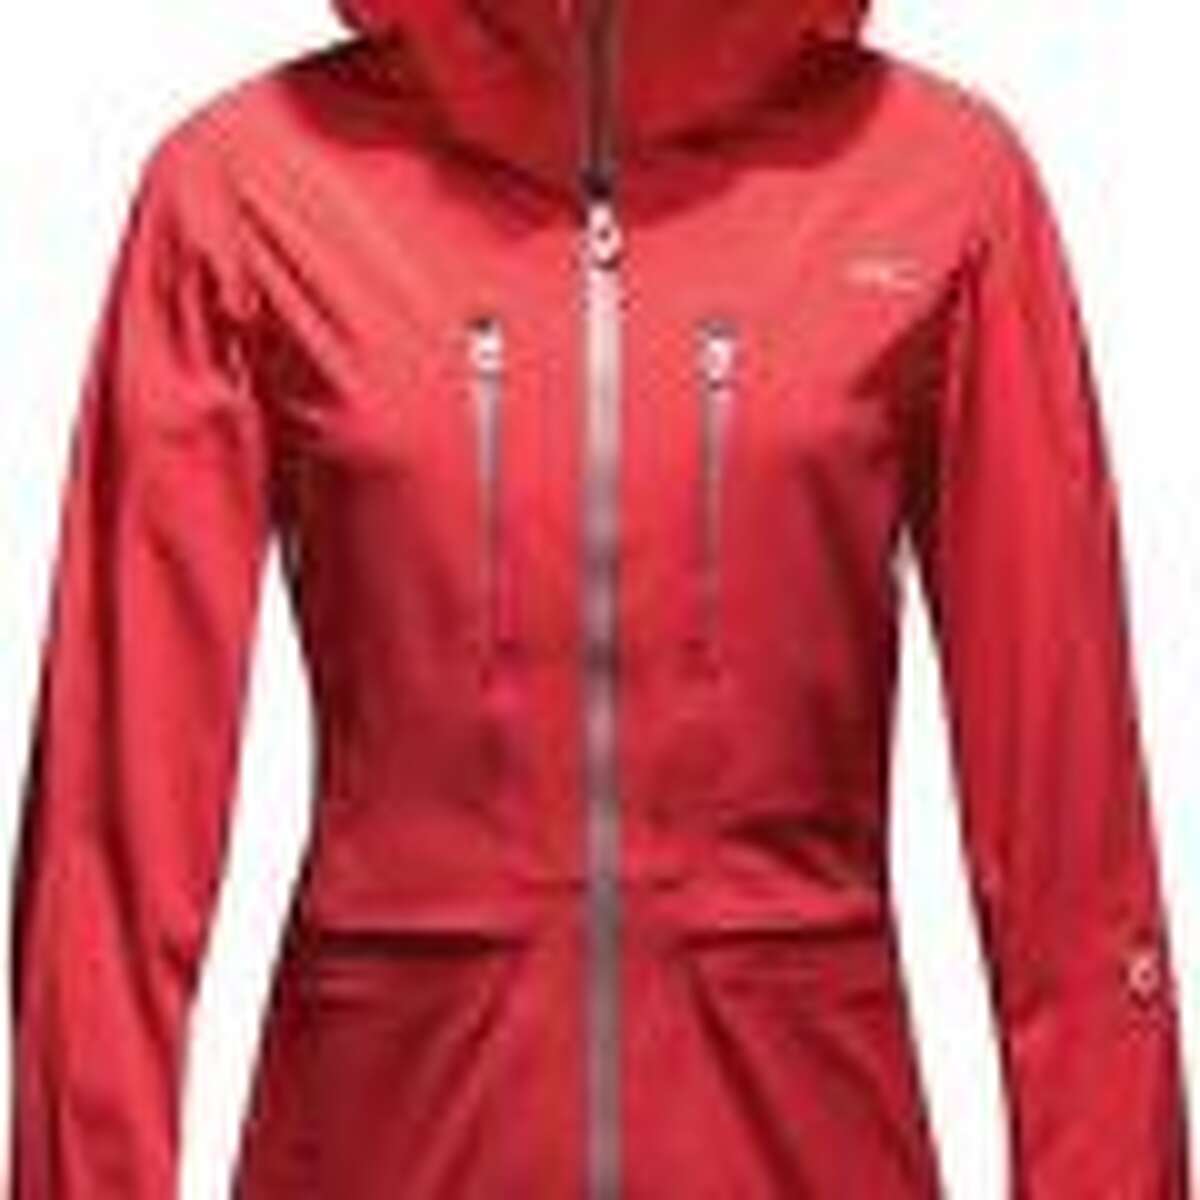  KJUS ladies FRX pro jacket, $899, from Darien Sport Shop, Darien, 203-655-22575, dariensport.com.